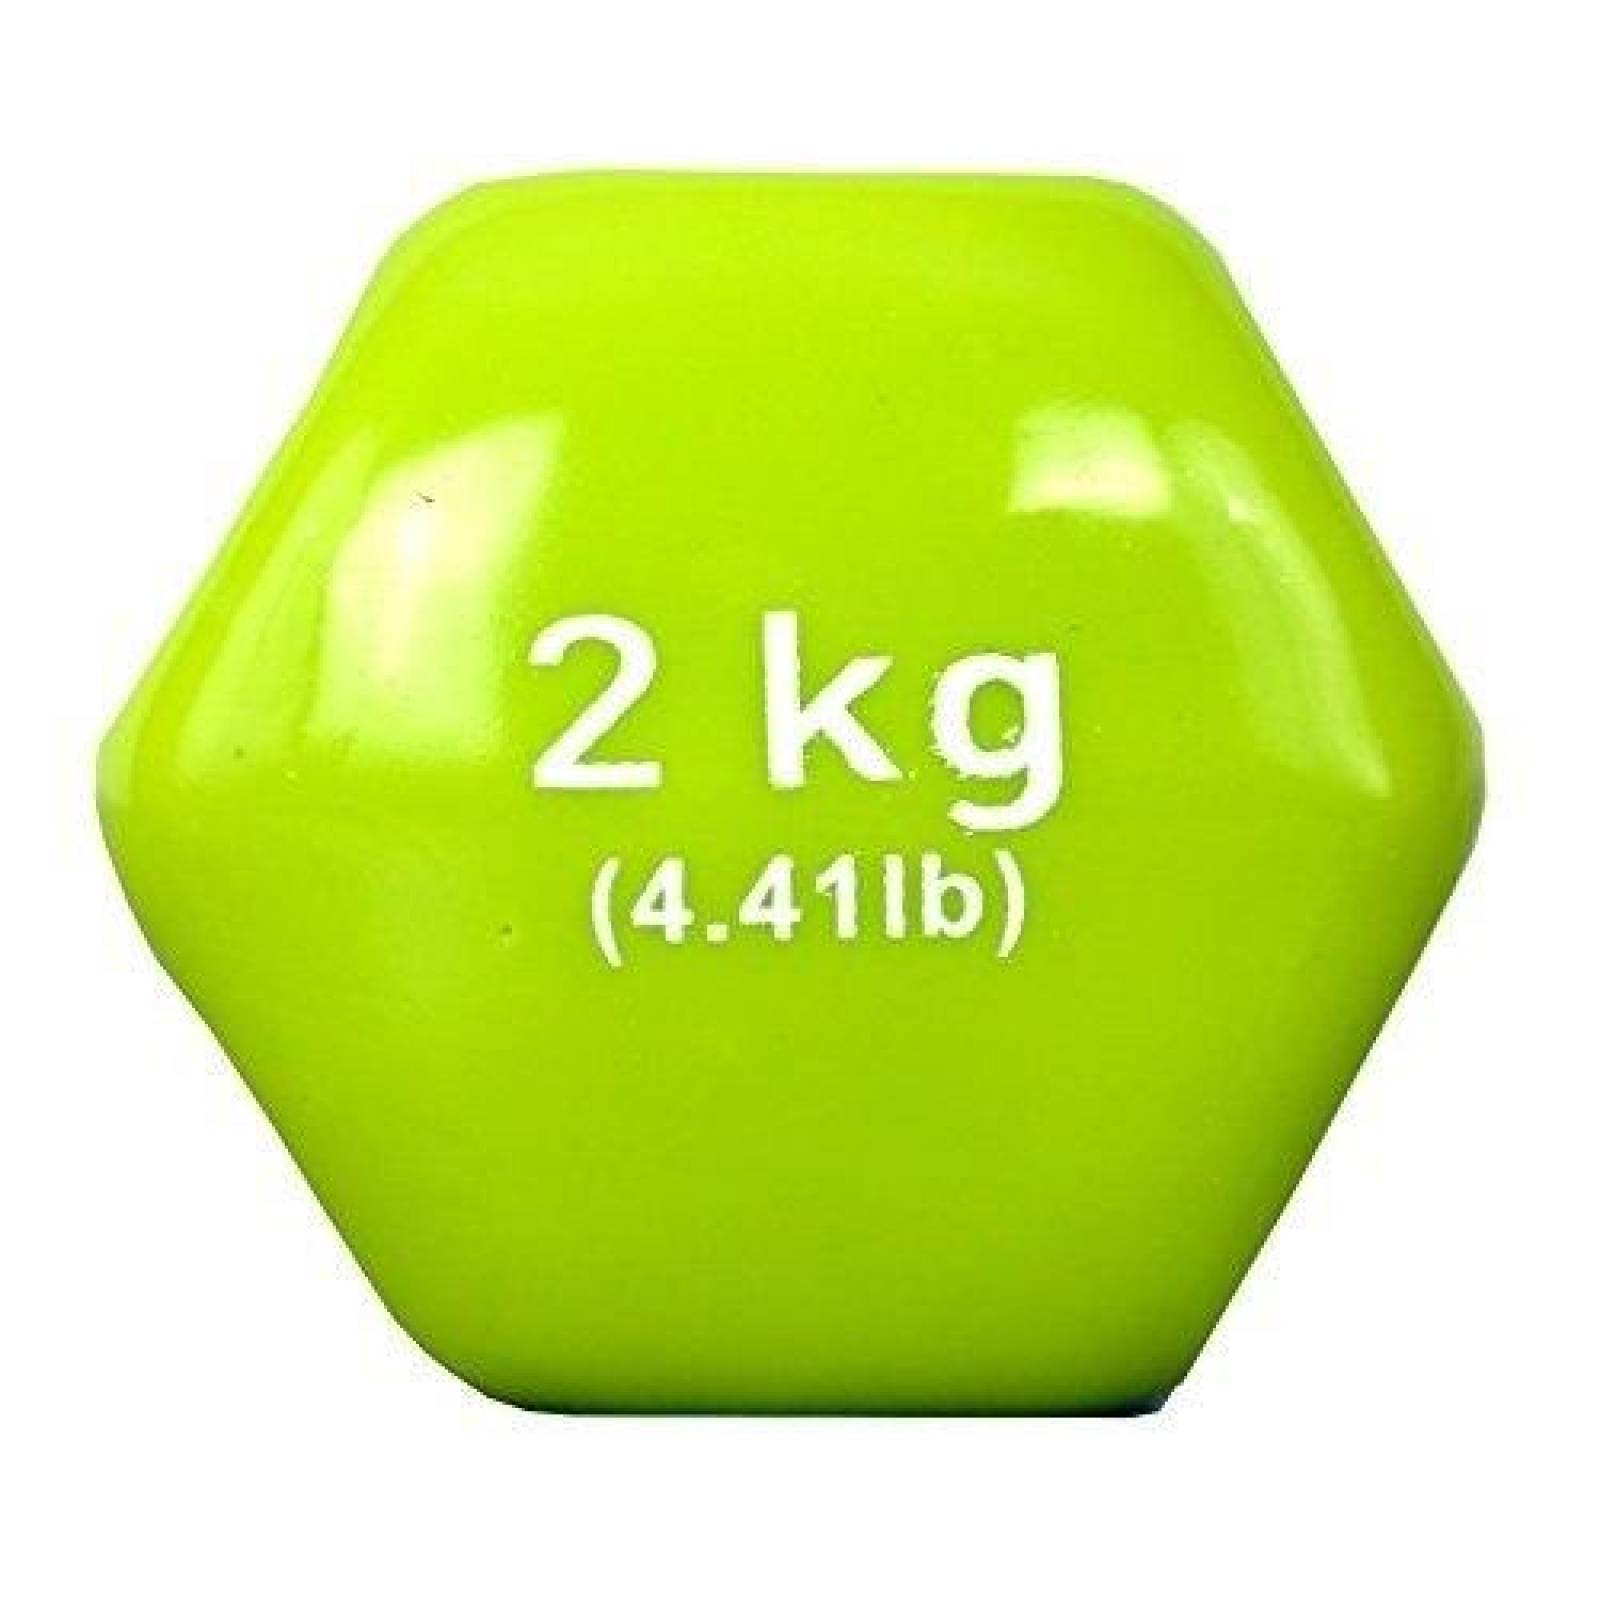 6 Mancuernas De Fierro Cubierta De Vinyl 2kg(CL) Verde limón